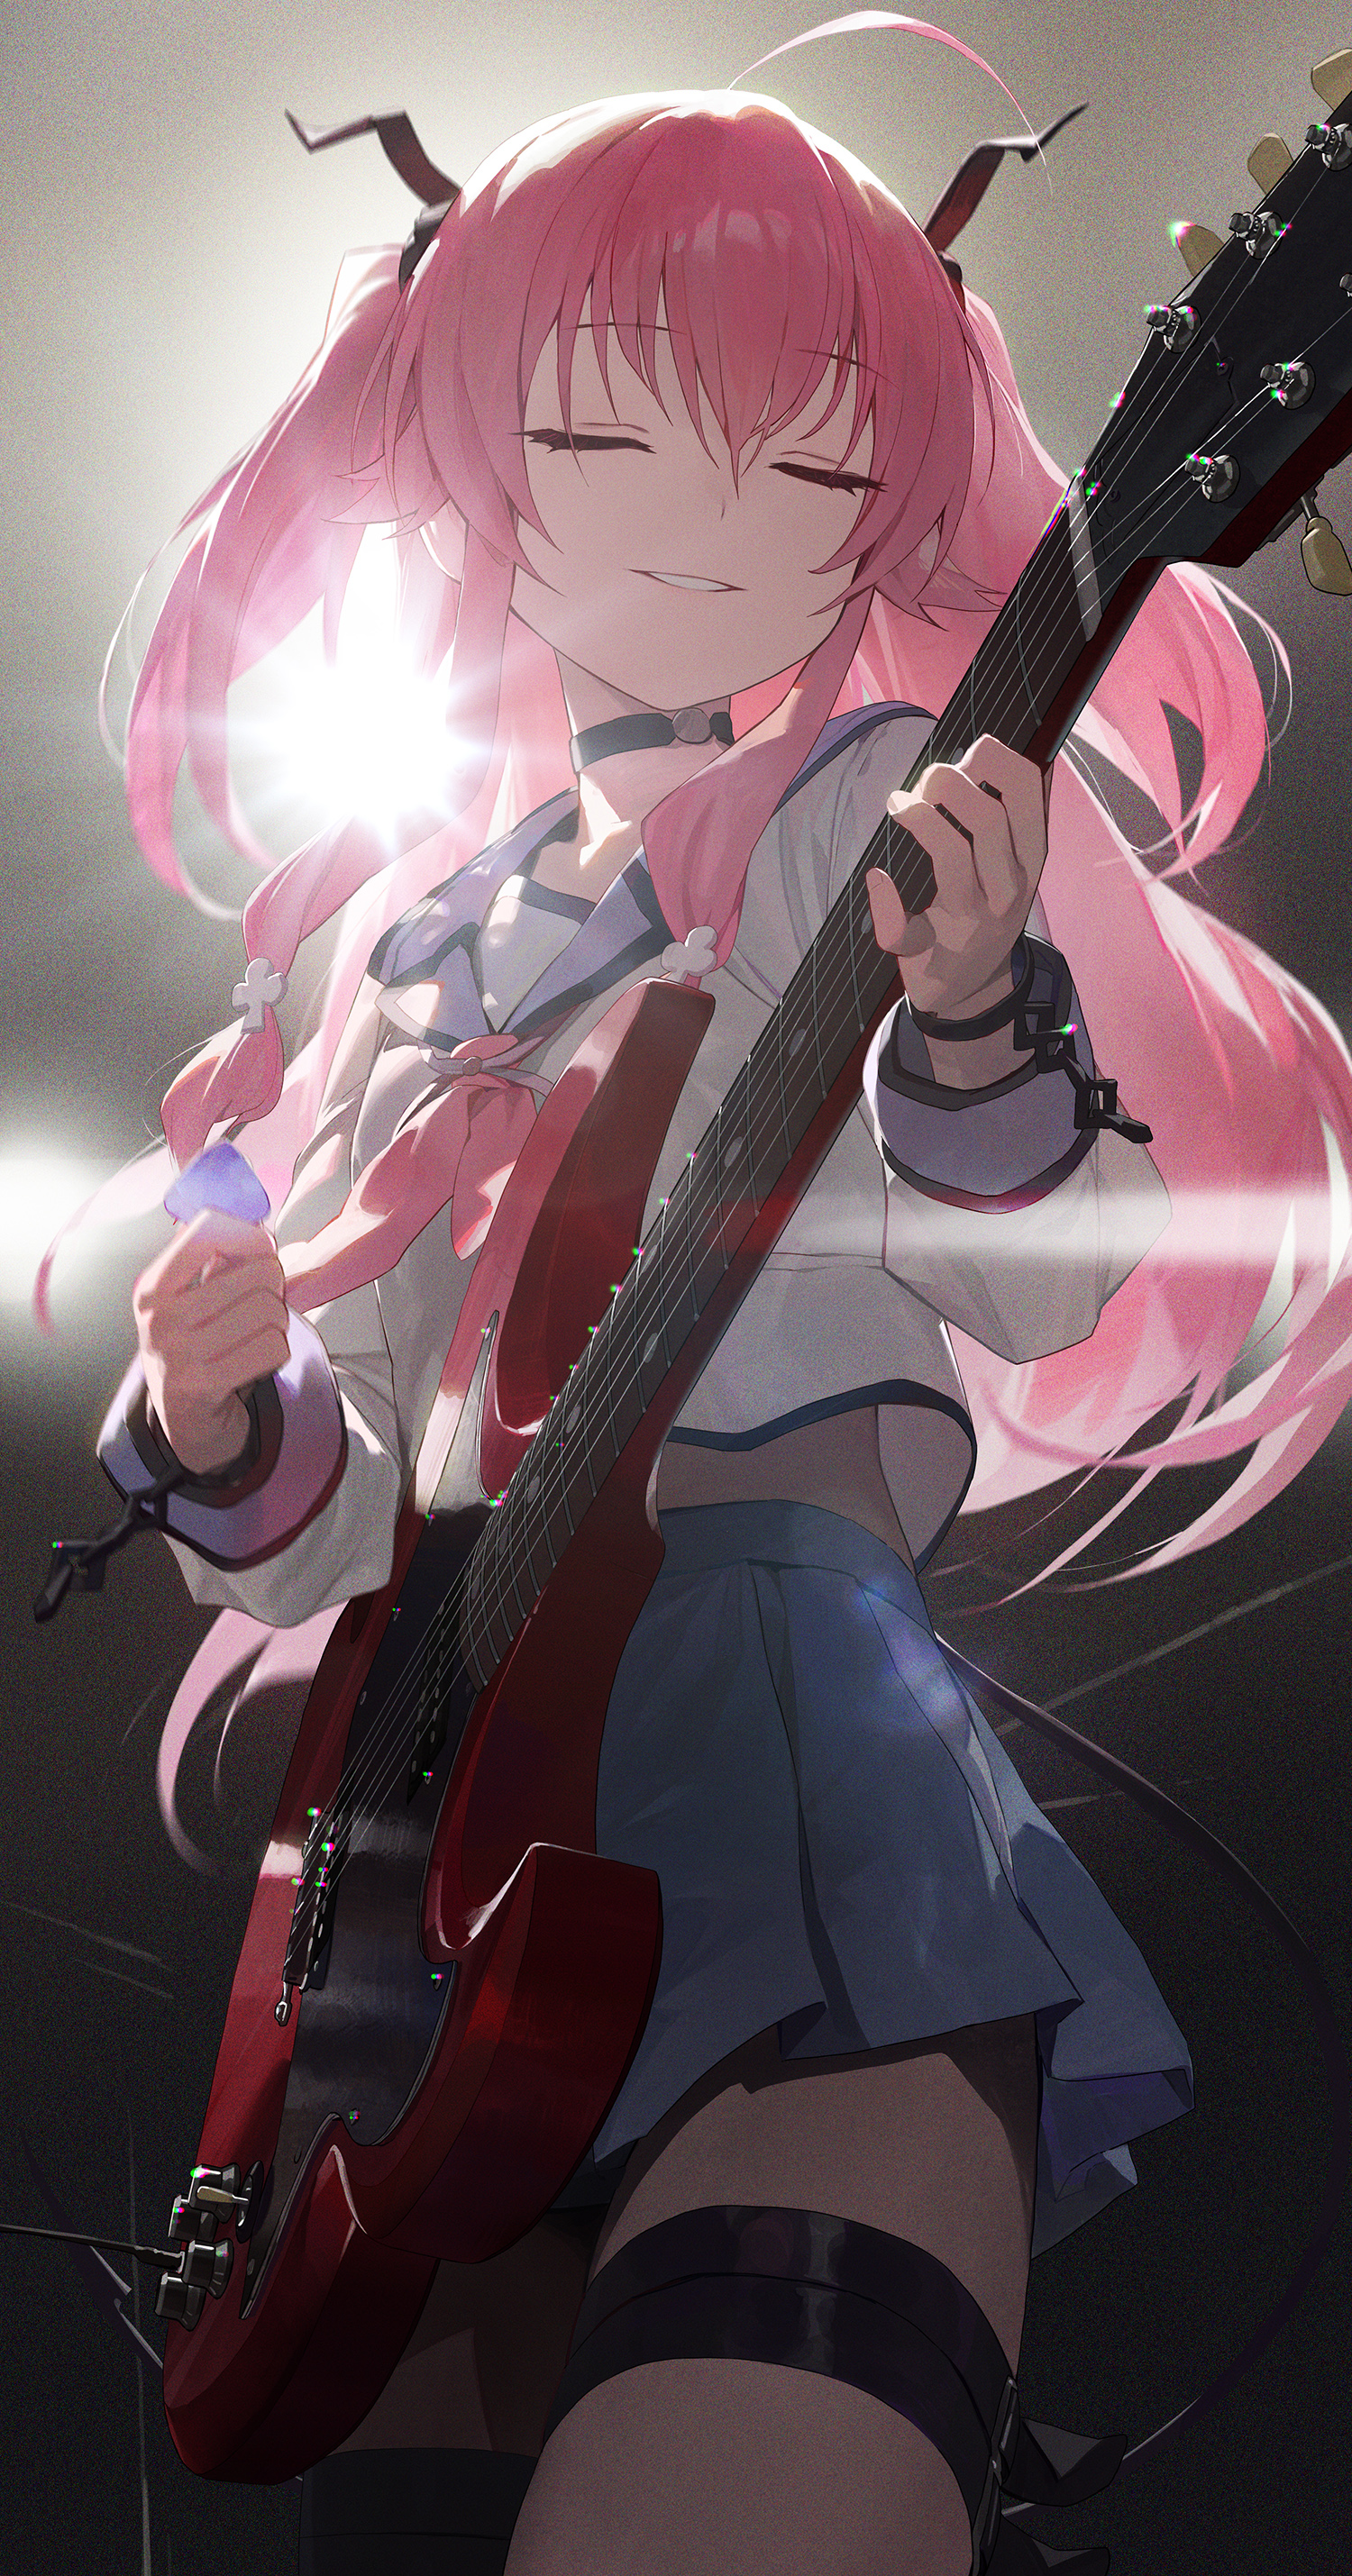 Anime 1500x2859 anime anime girls Angel Beats! Yui (Angel Beats!) closed eyes pink hair guitar musical instrument school uniform artwork Mossi (artist) plectrum